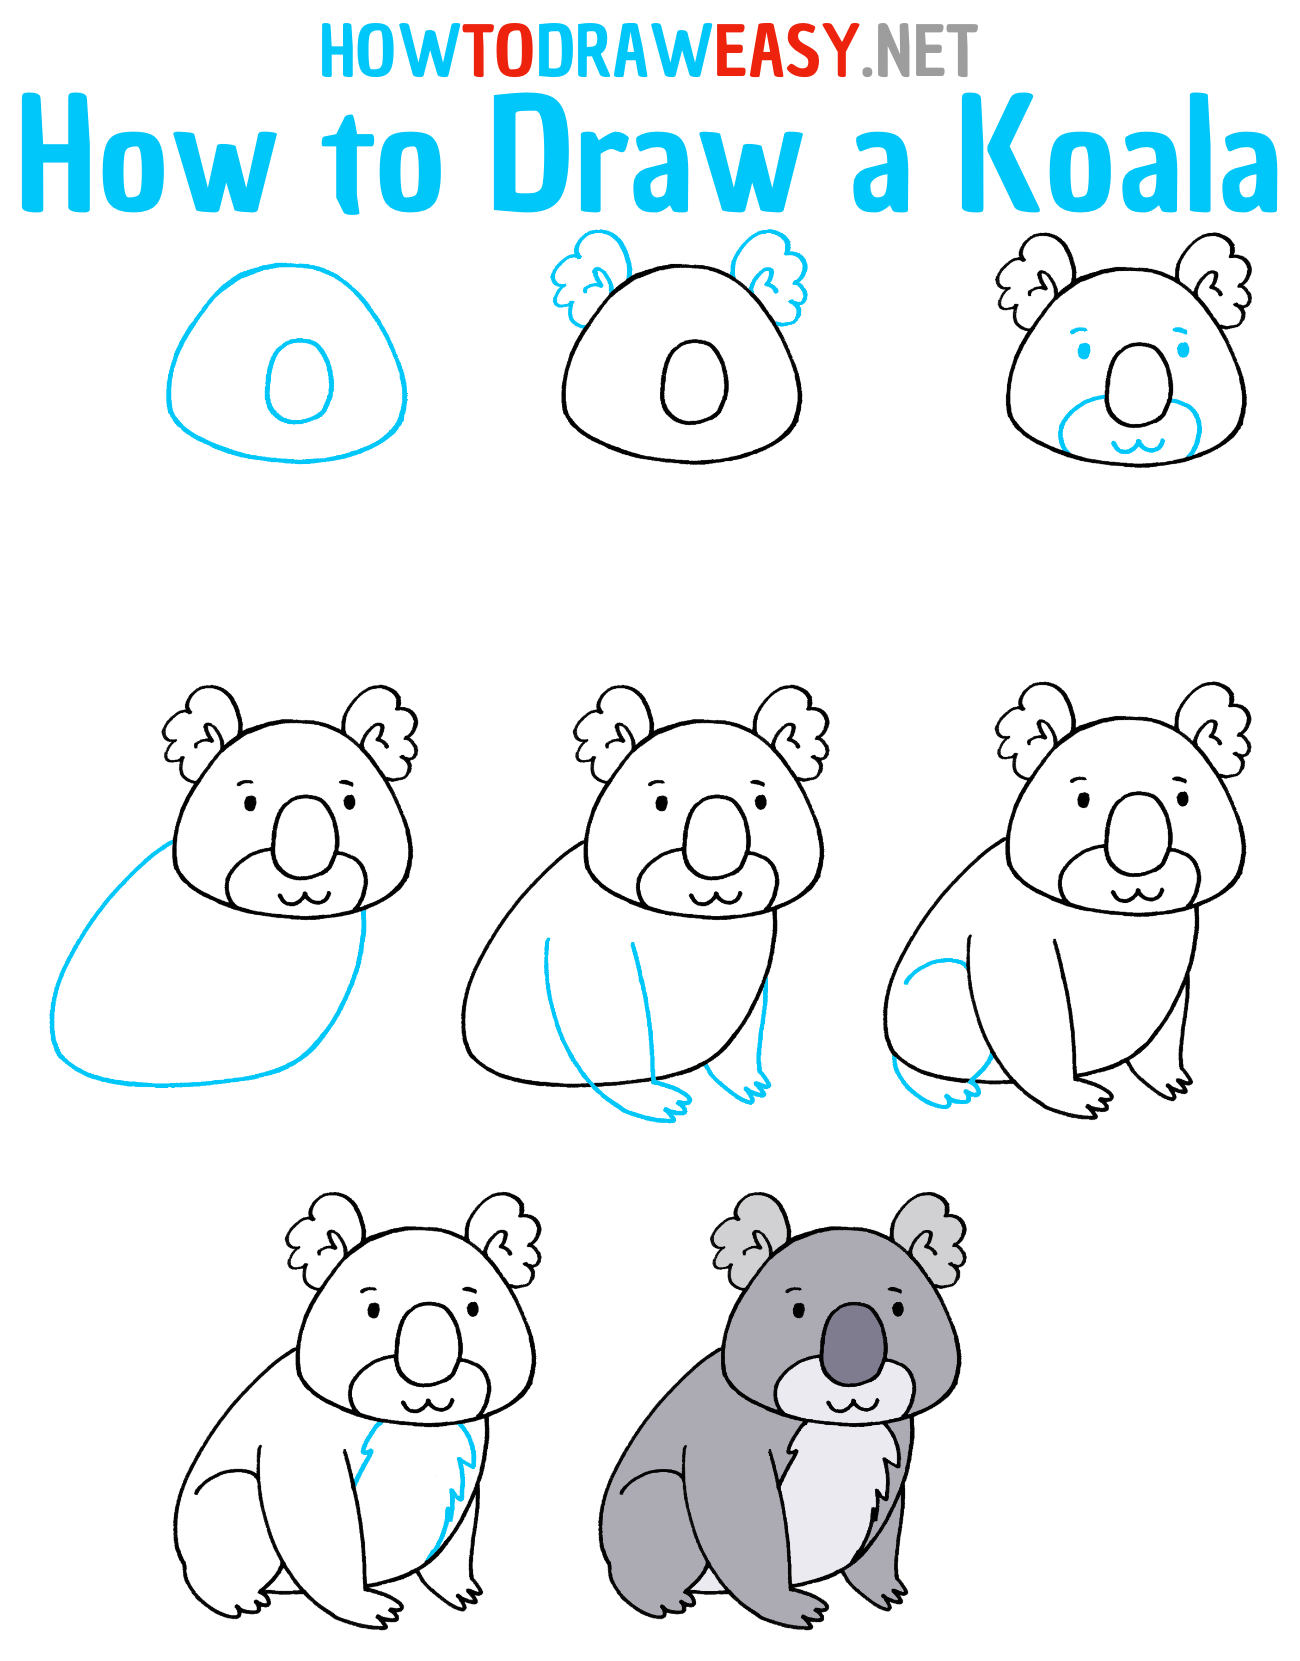 How to Draw a Koala Step by Step